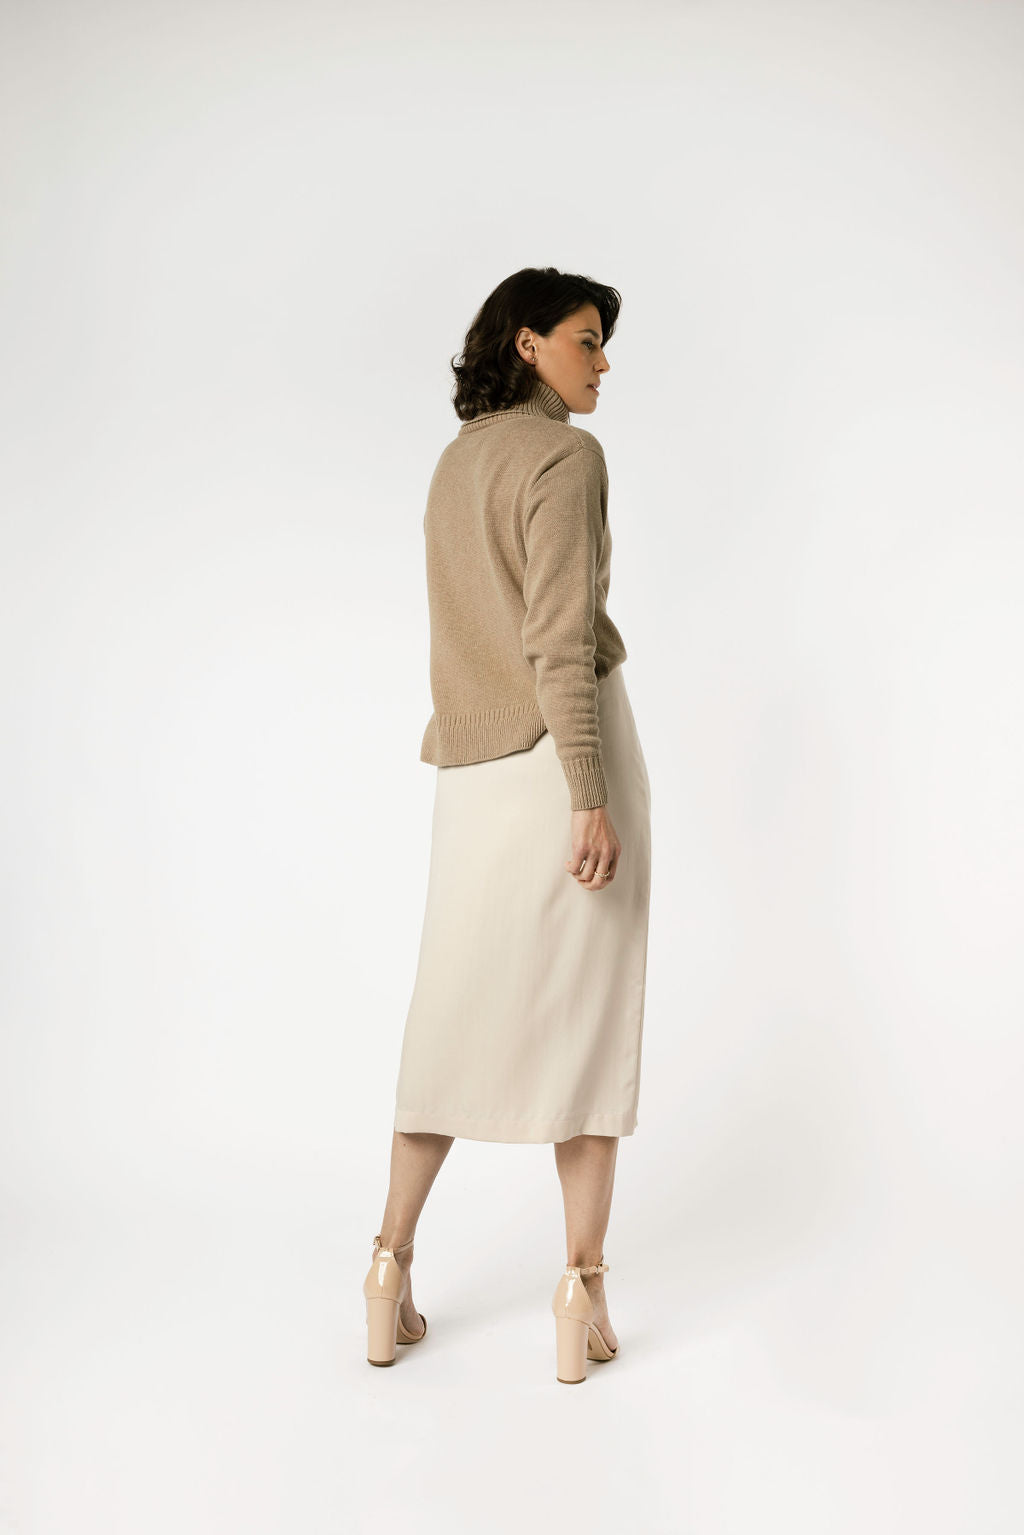 Minimalist Capsule Wardrobe for Work Cream Skirt